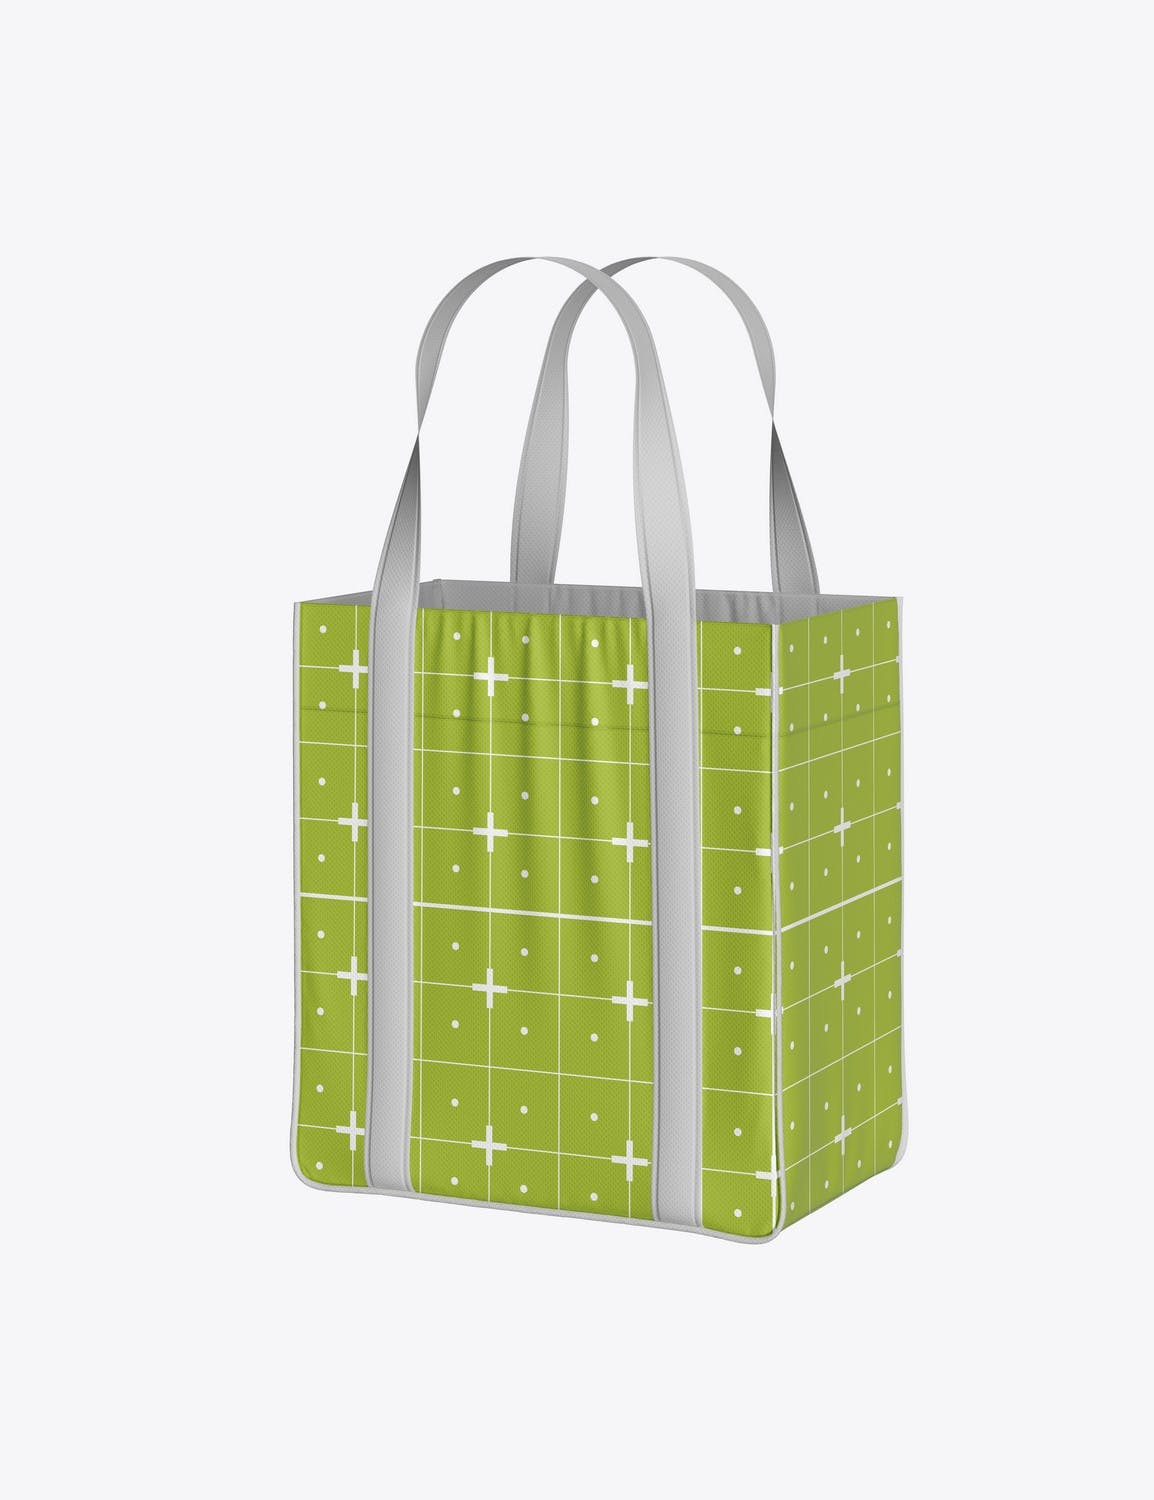 生态帆布袋包装Logo设计样机 Eco Canvas Bag Mockup 样机素材 第7张